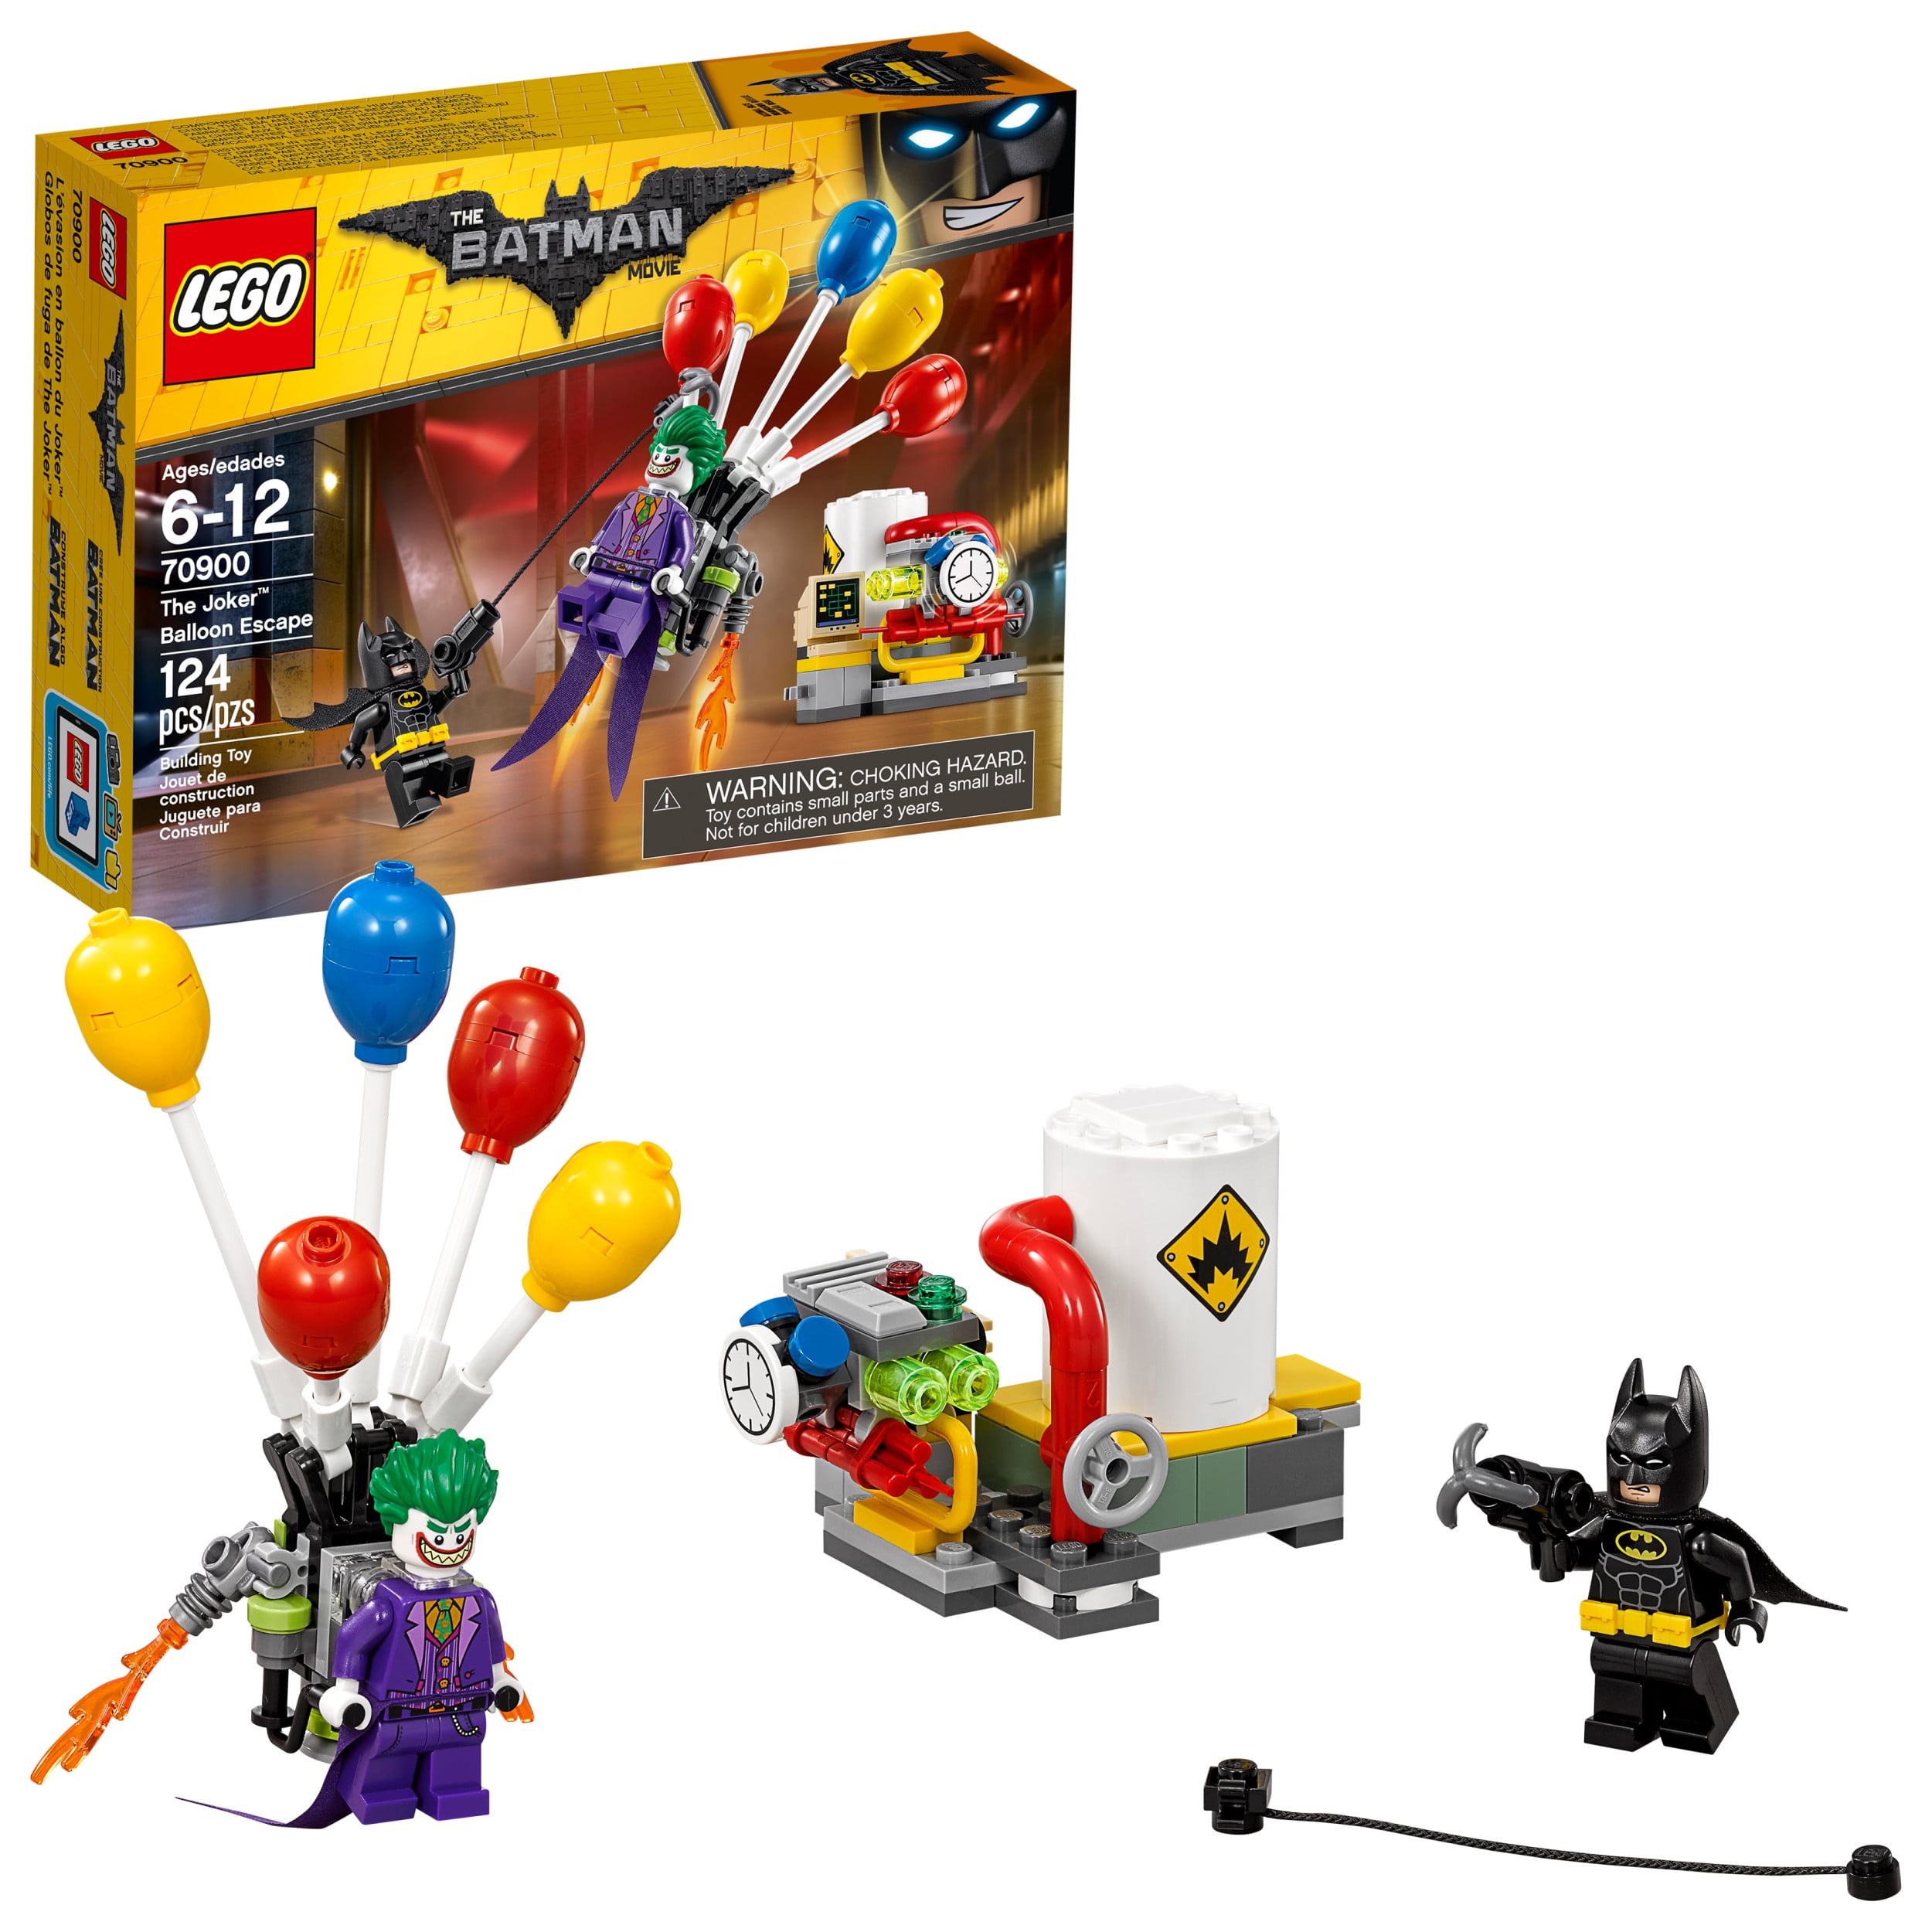 Grisling Mediator flyde The LEGO Batman Movie - The Joker Balloon Escape (70900) - Walmart.com